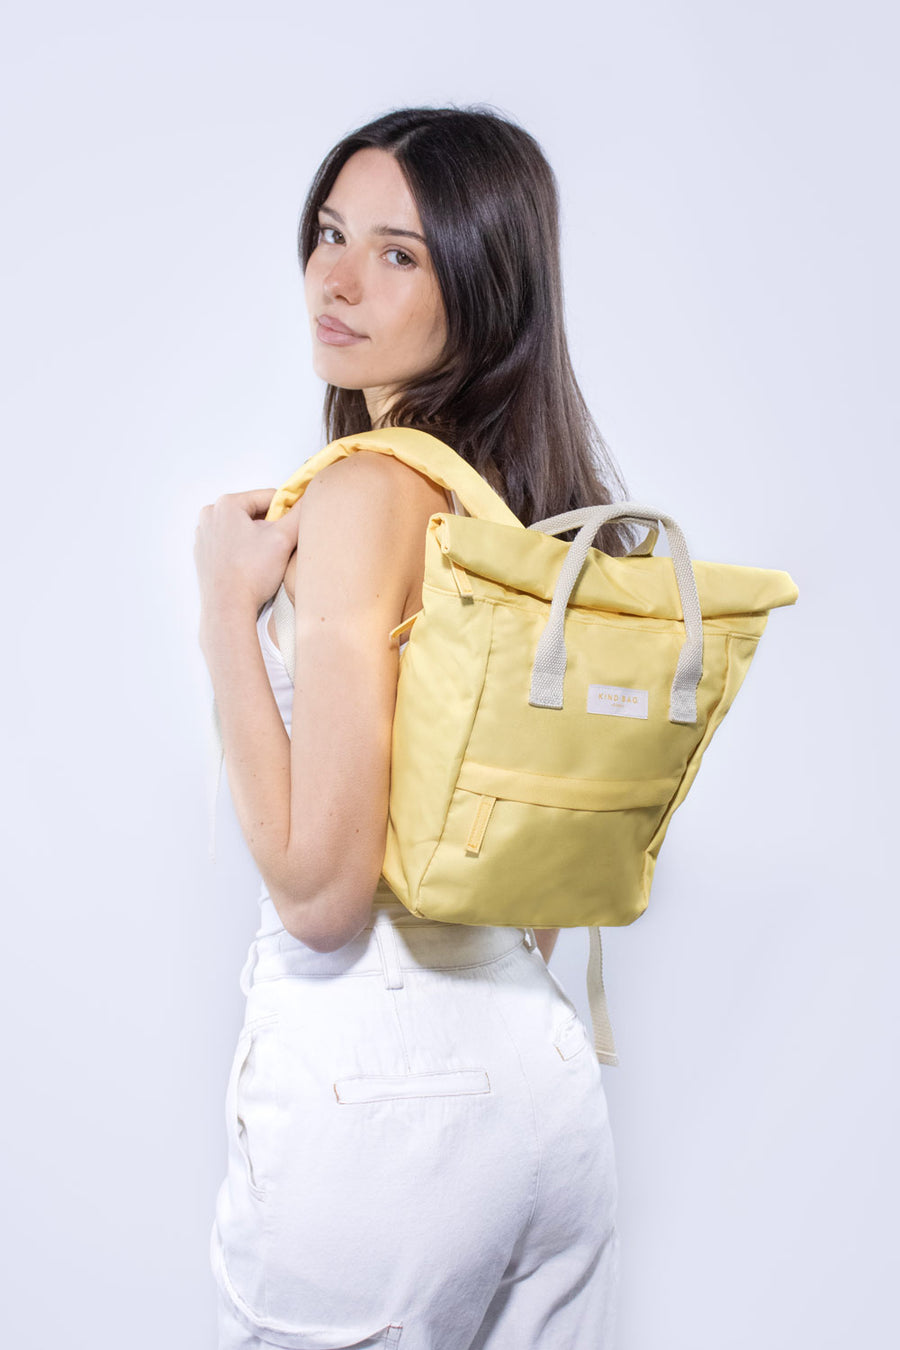 Buttercup | “Hackney” 2.0 Backpack | Mini